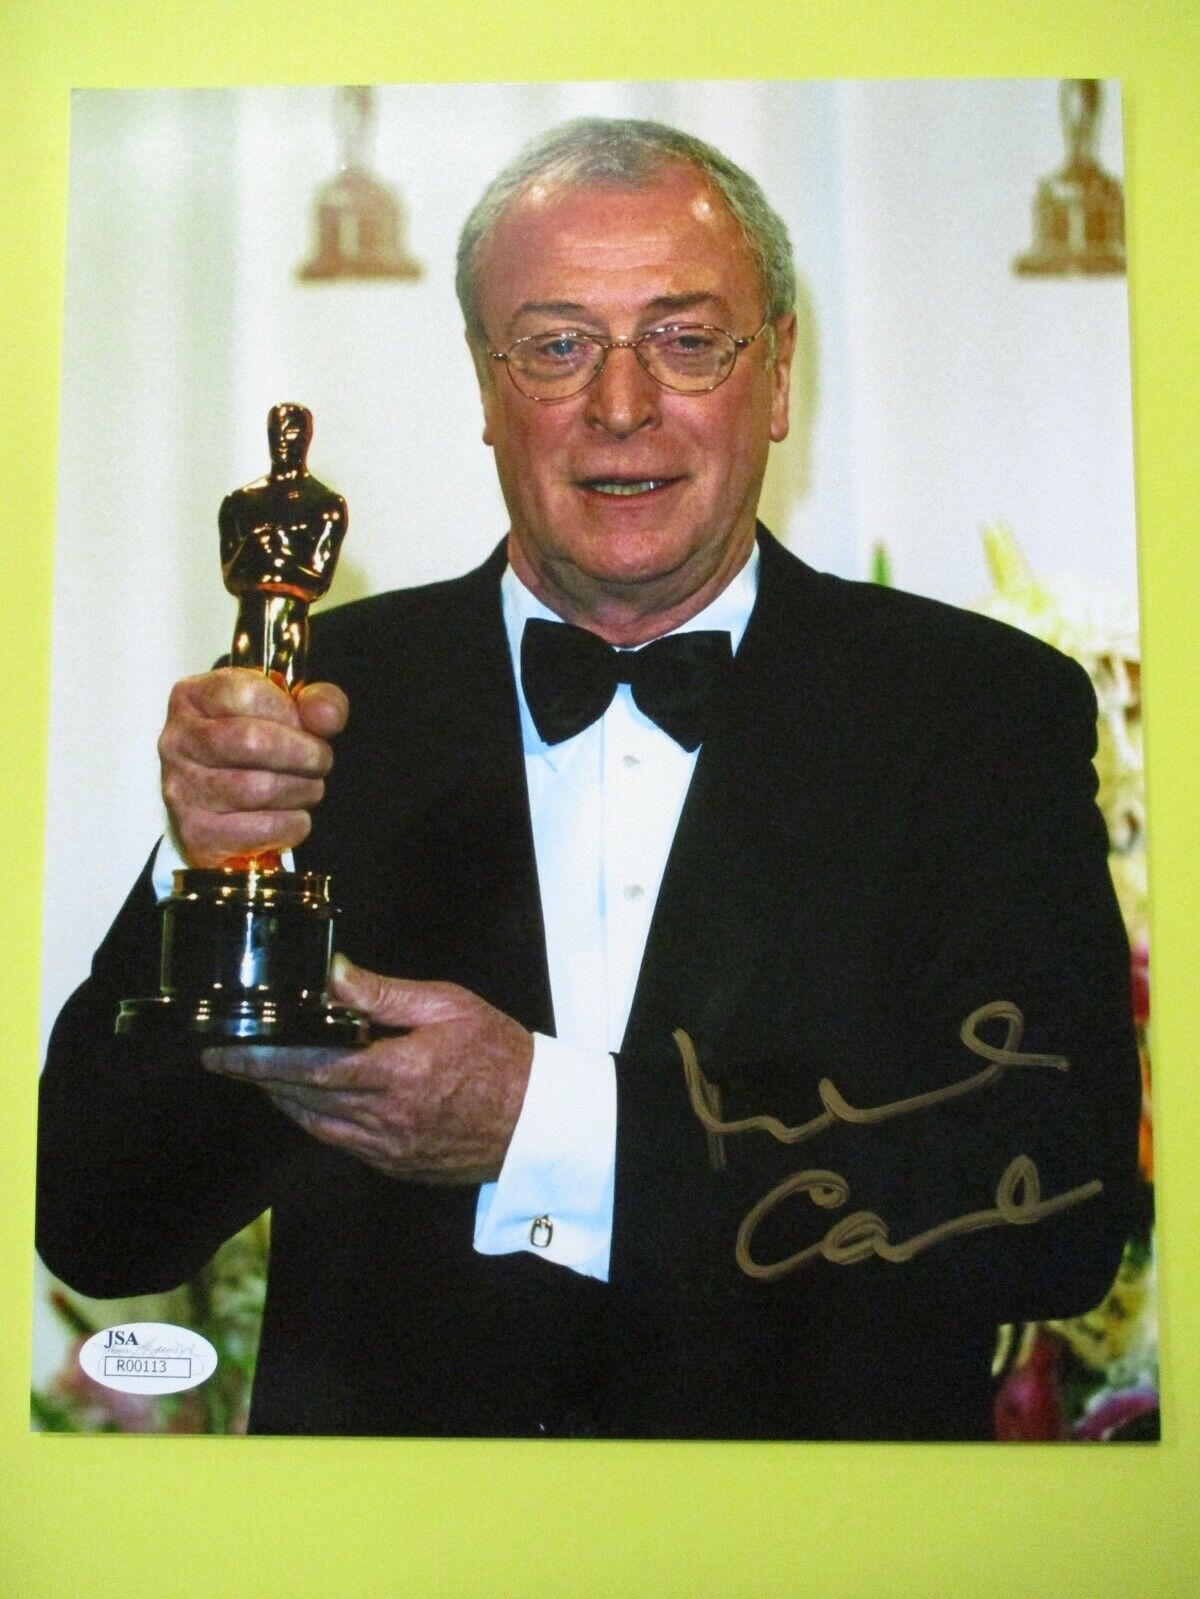 Michael Caine Academy Award Winner Signed Autograph 8x10 Color Photo JSA